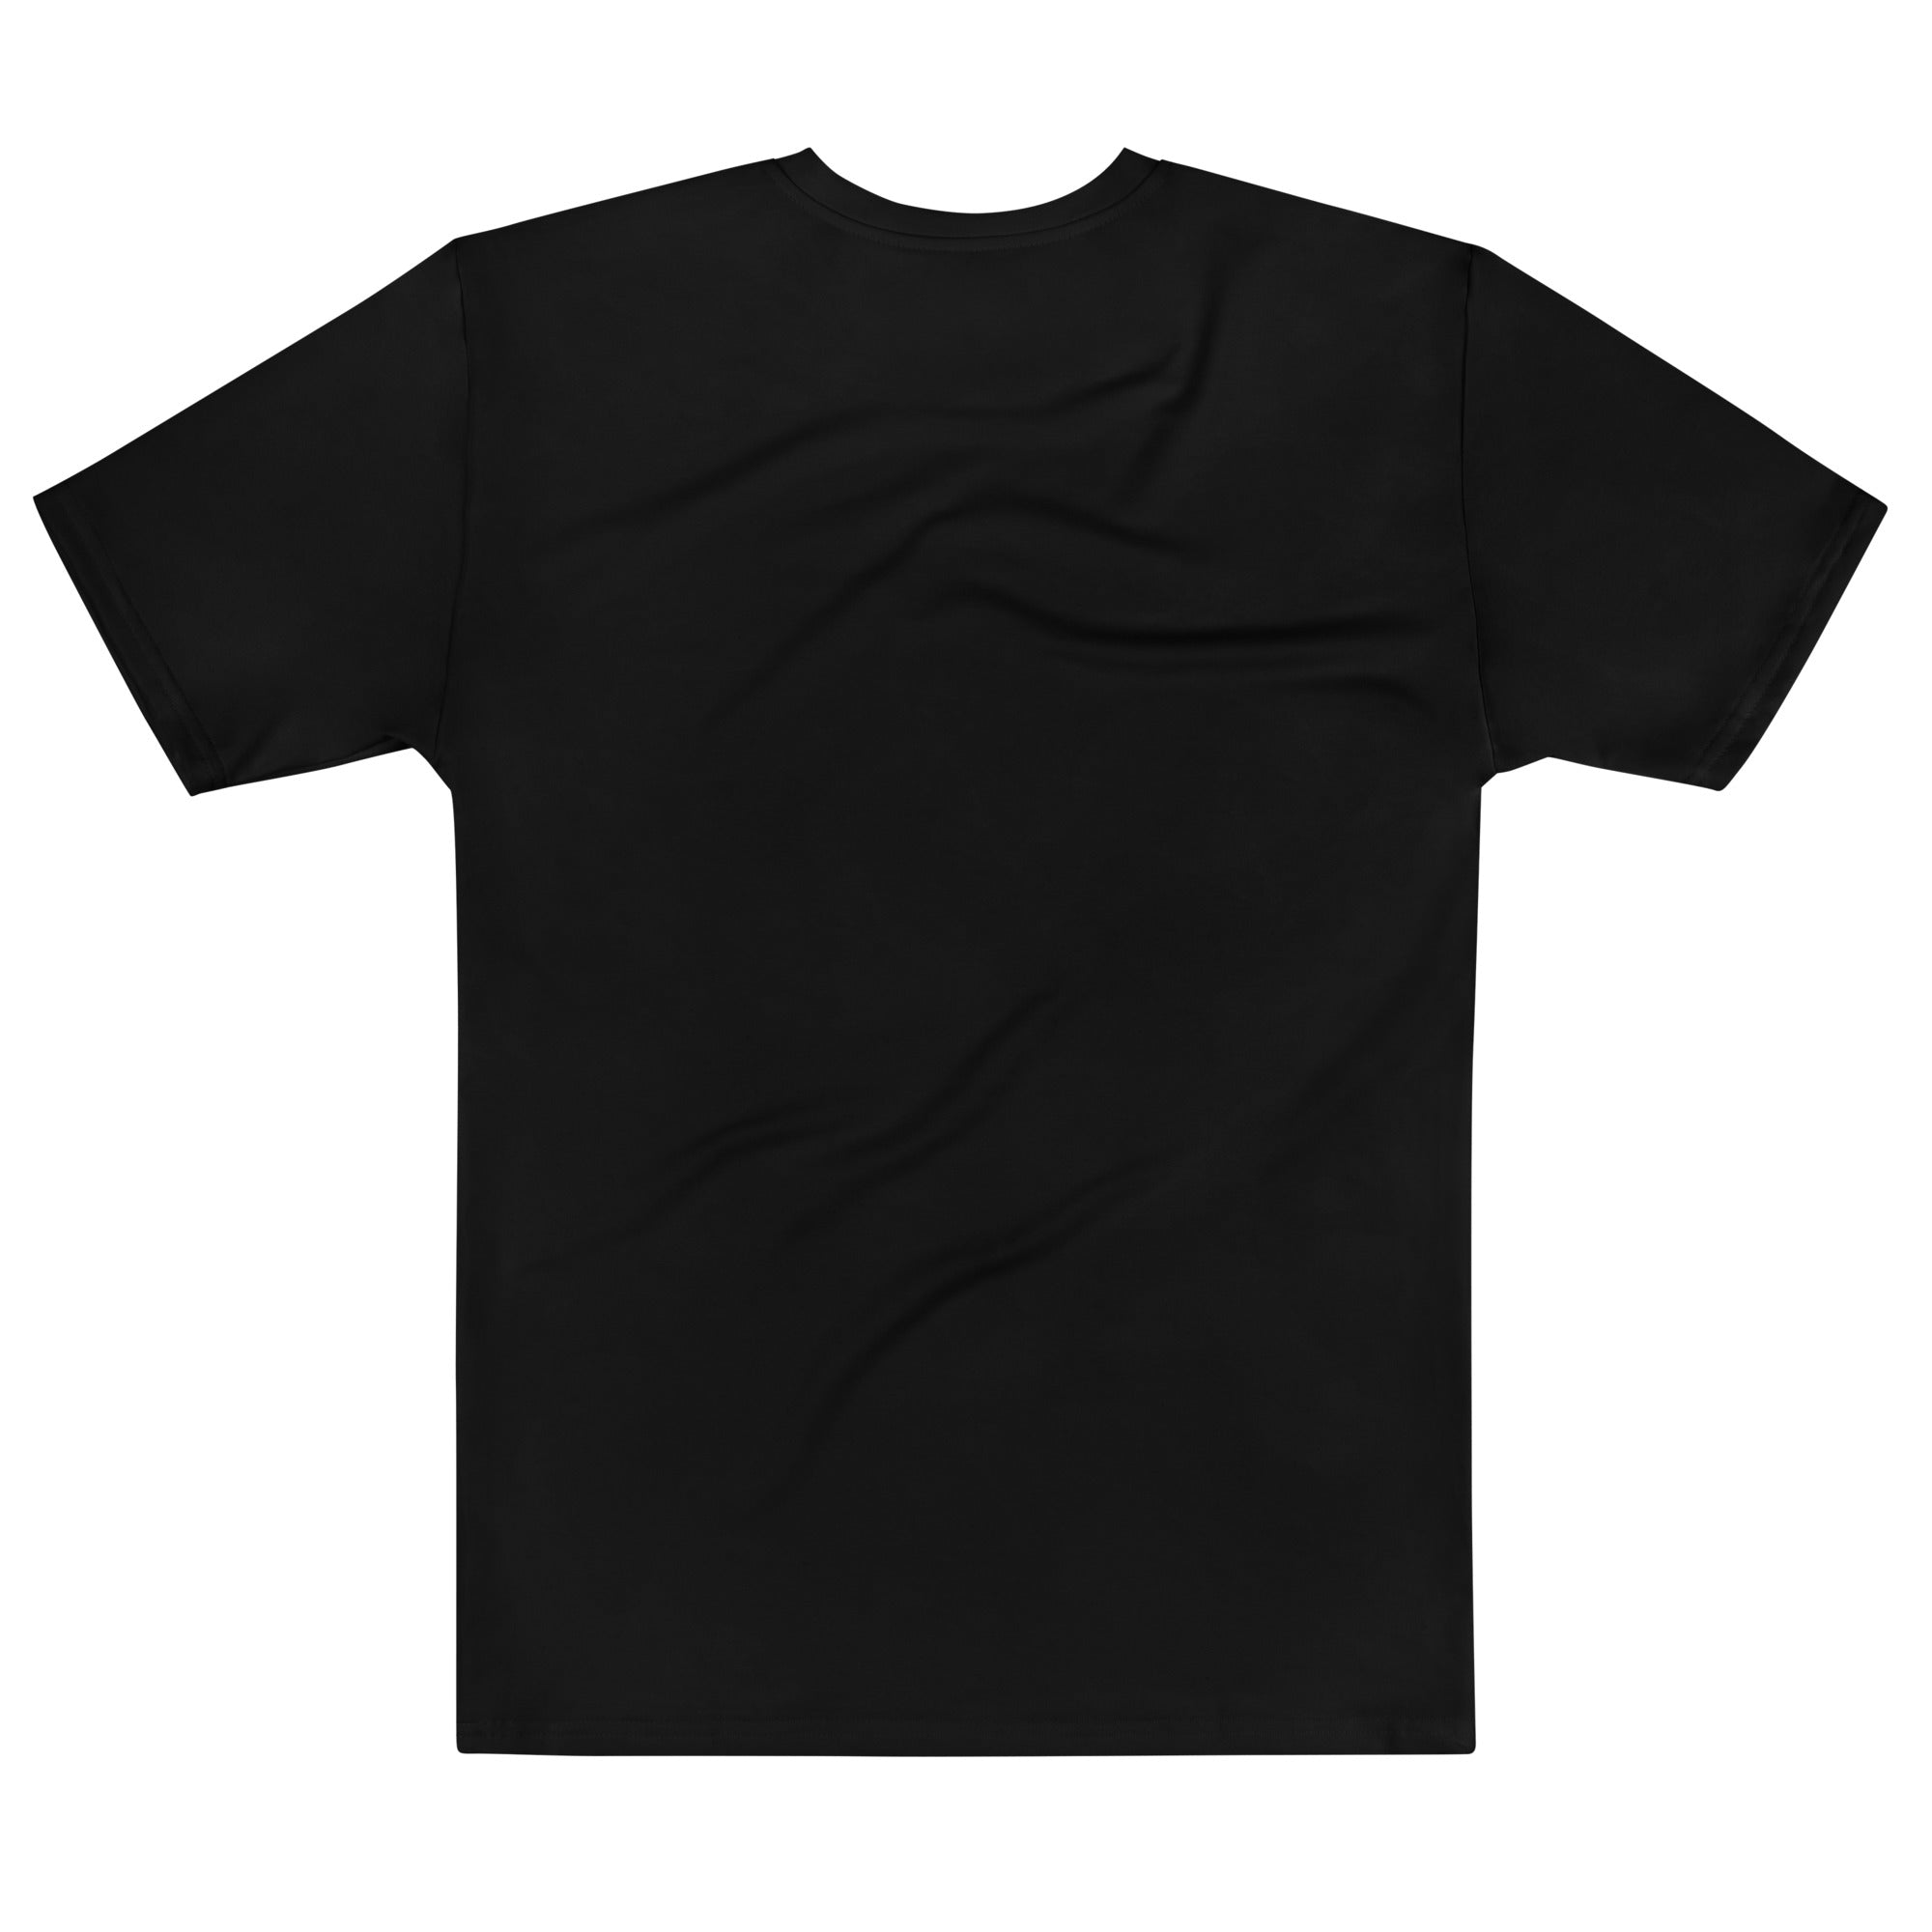 black and white shirt design